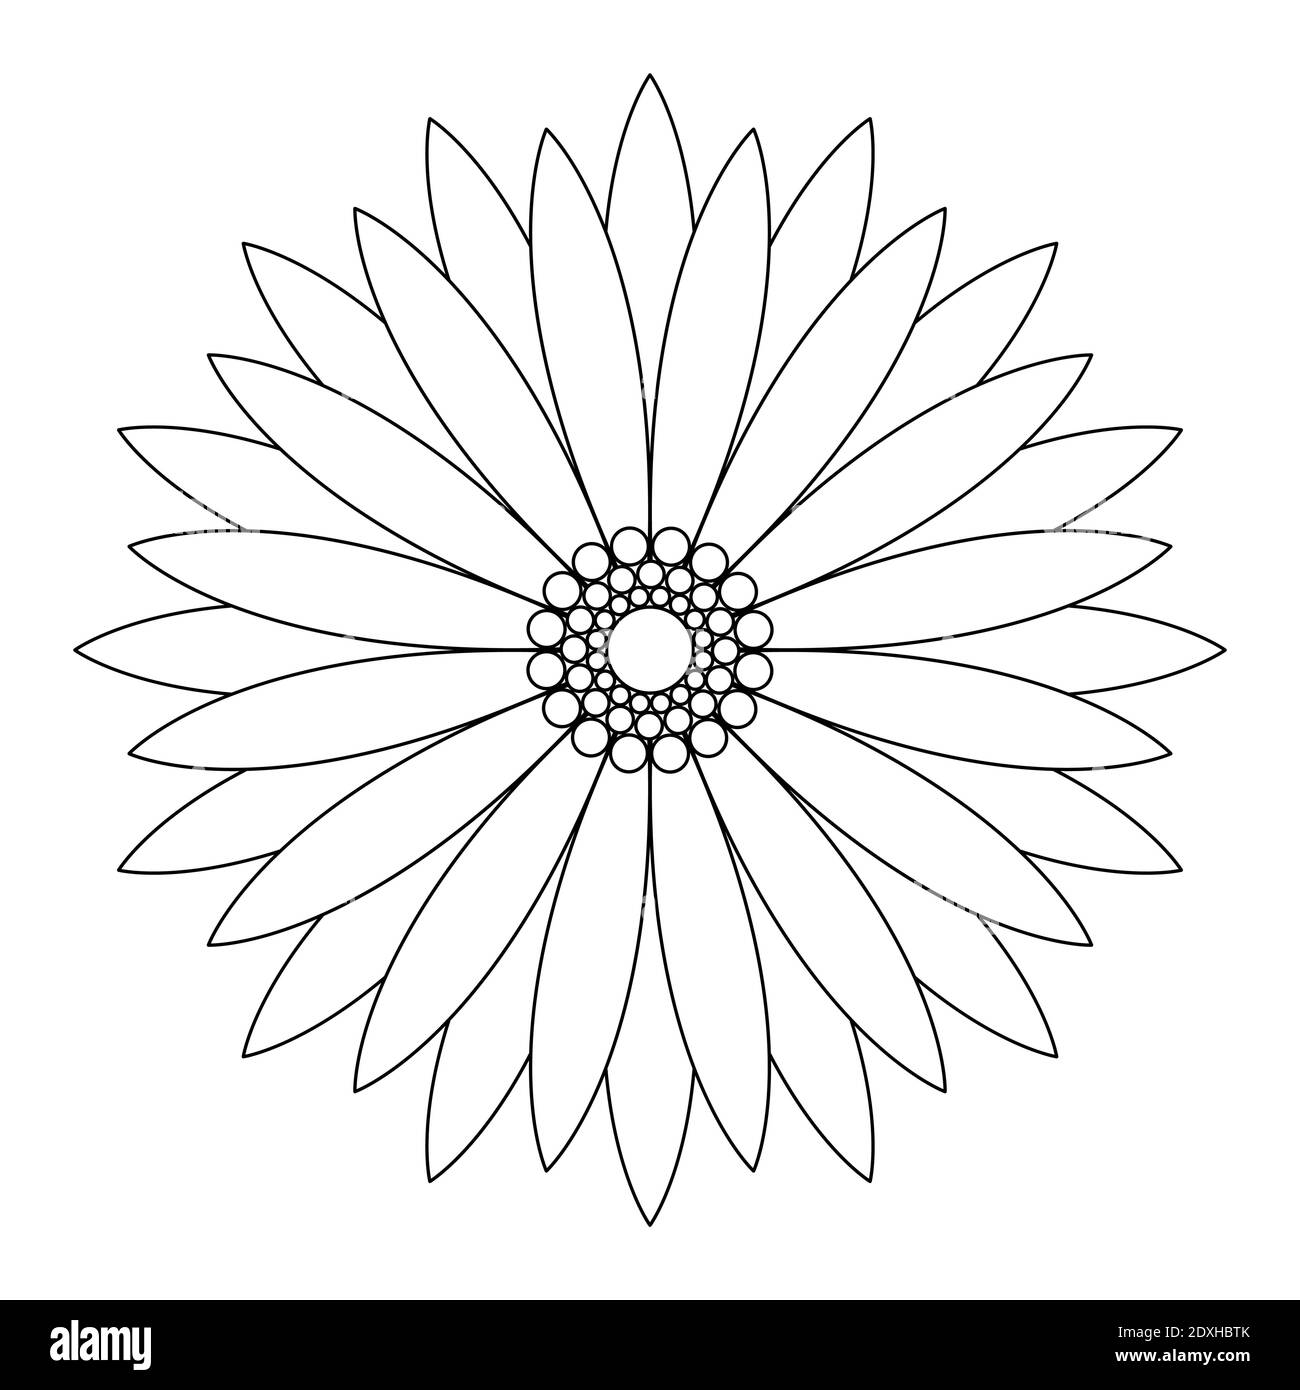 12 Elegant And Minimalist Sunflower Tattoo Ideas | Preview.ph